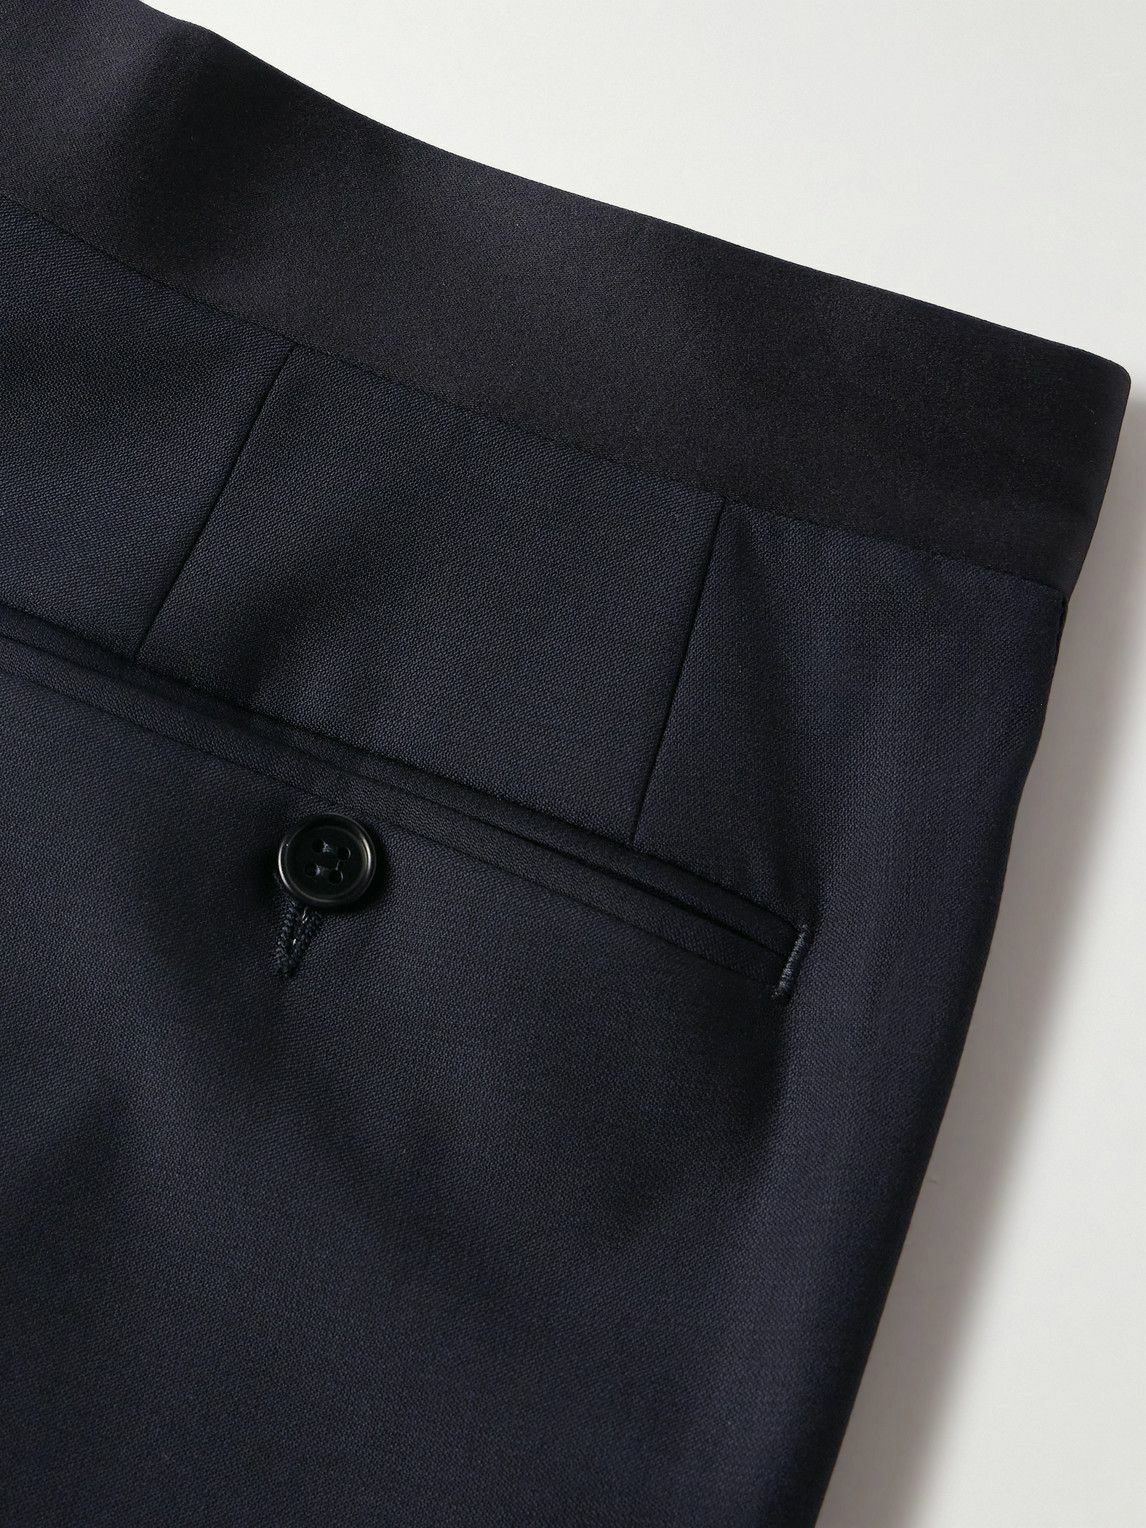 ASOS DESIGN skinny tuxedo suit trousers in navy | ASOS